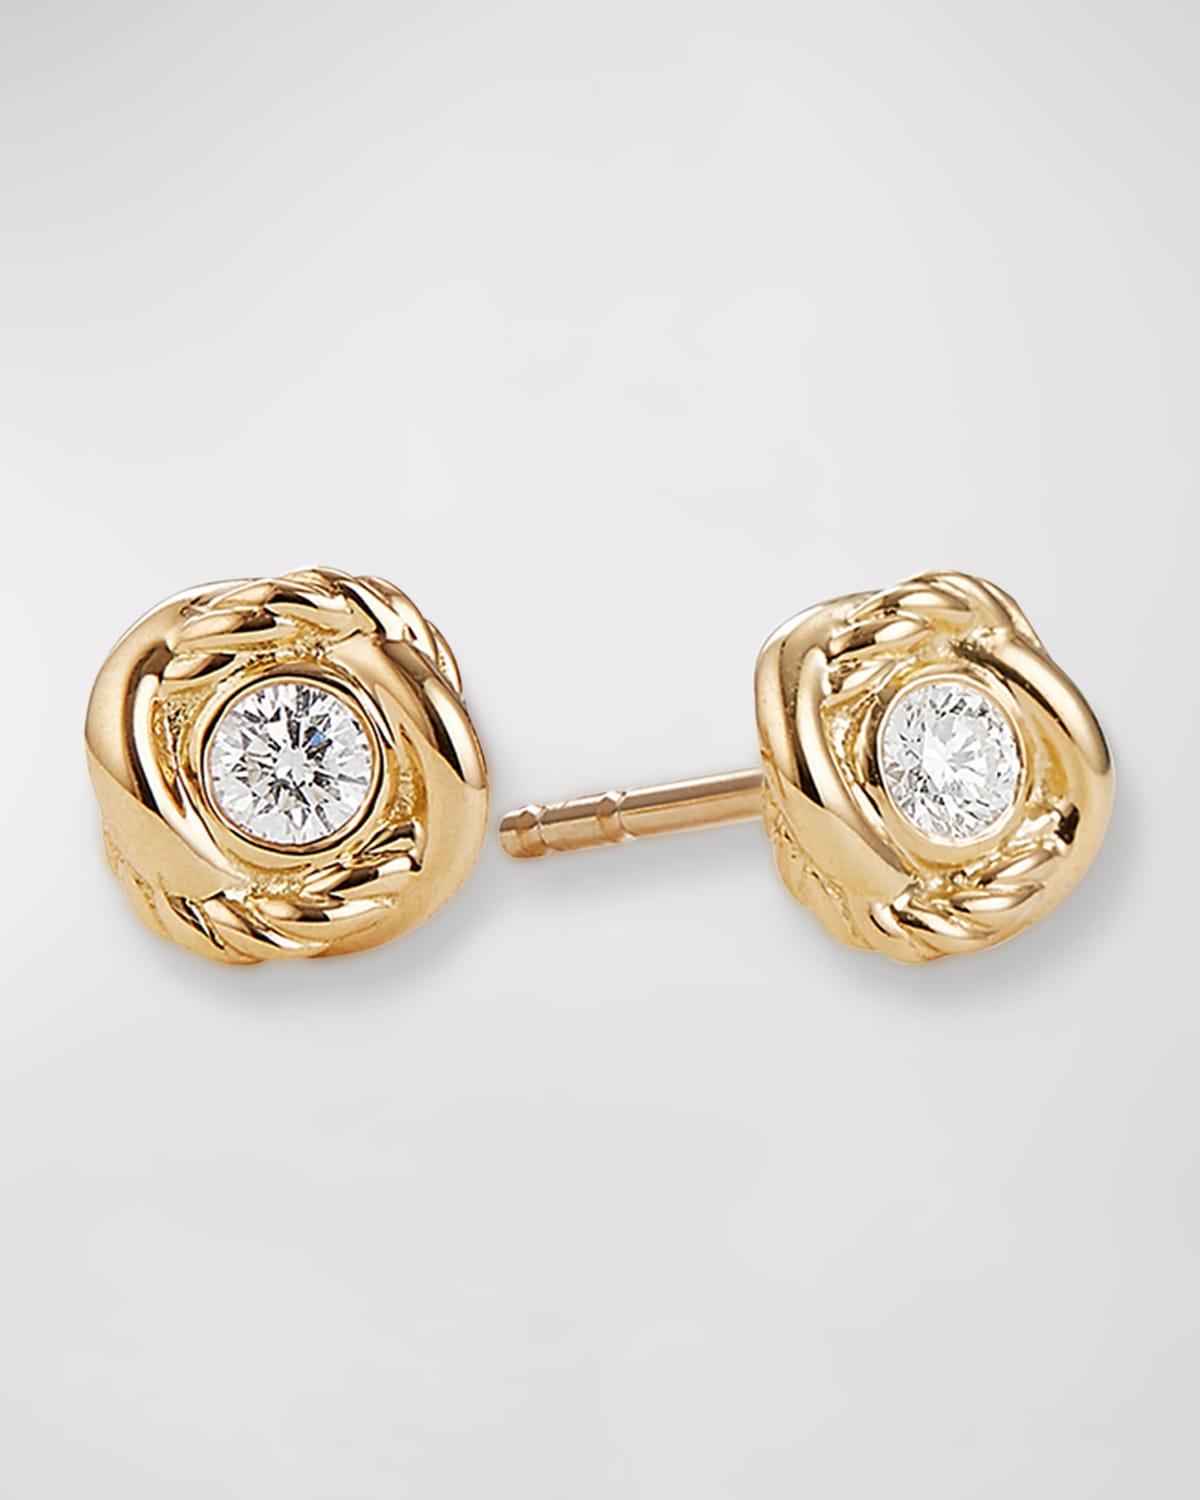 DAVID YURMAN INFINITY EARRINGS WITH DIAMONDS IN 18K GOLD, 6.8MM